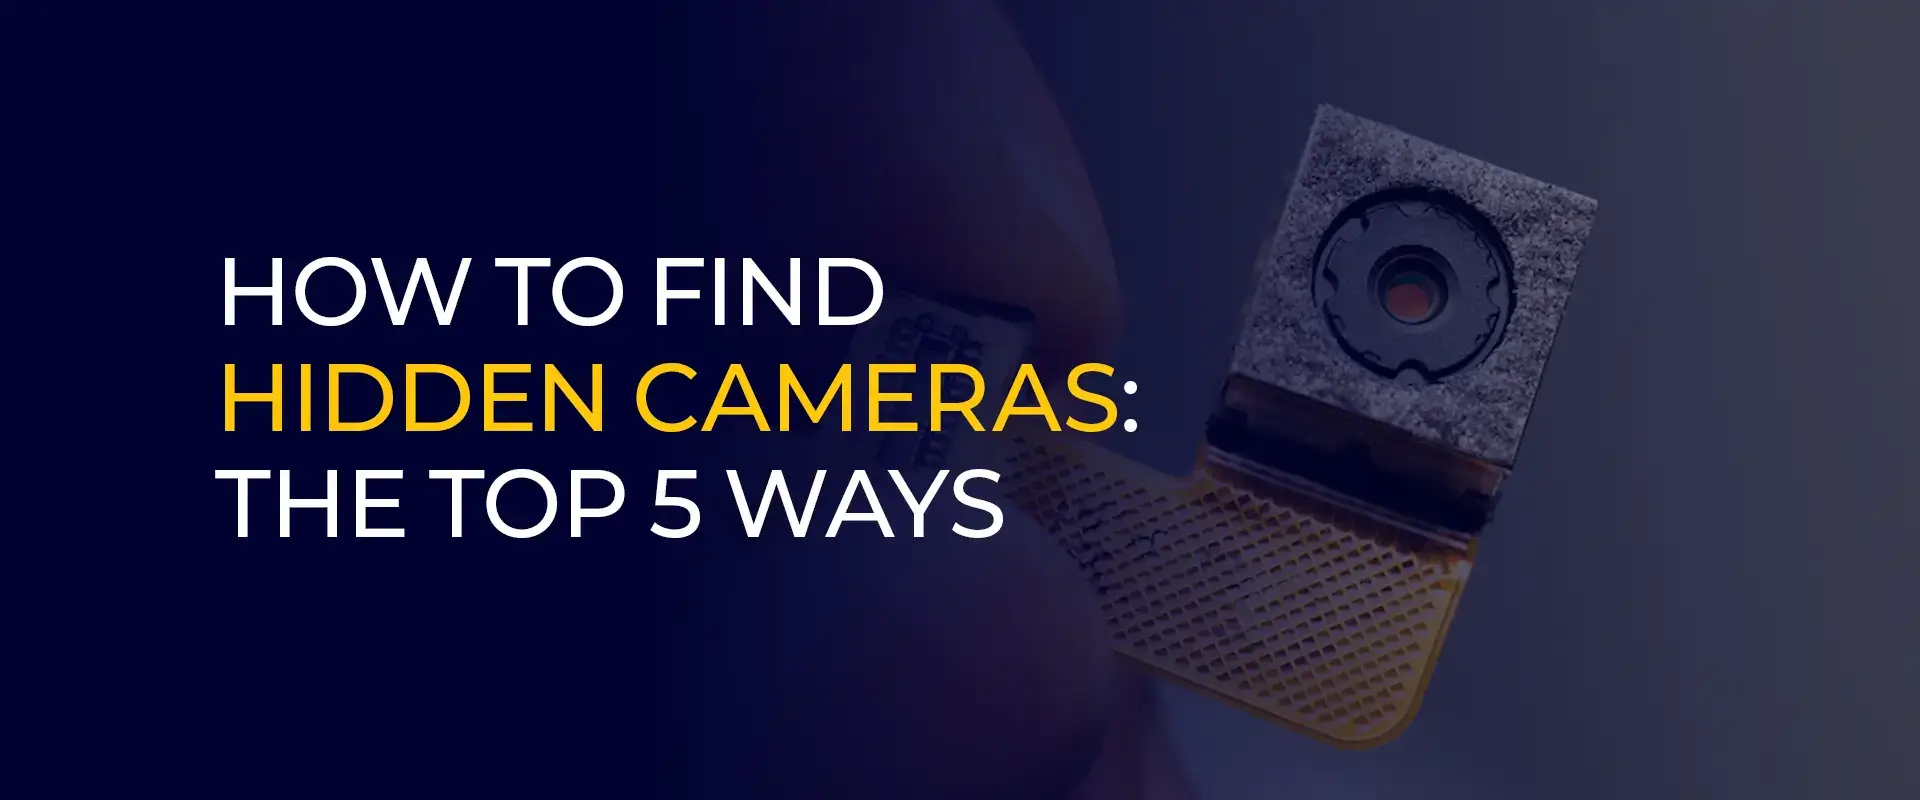 How to Find Hidden Cameras